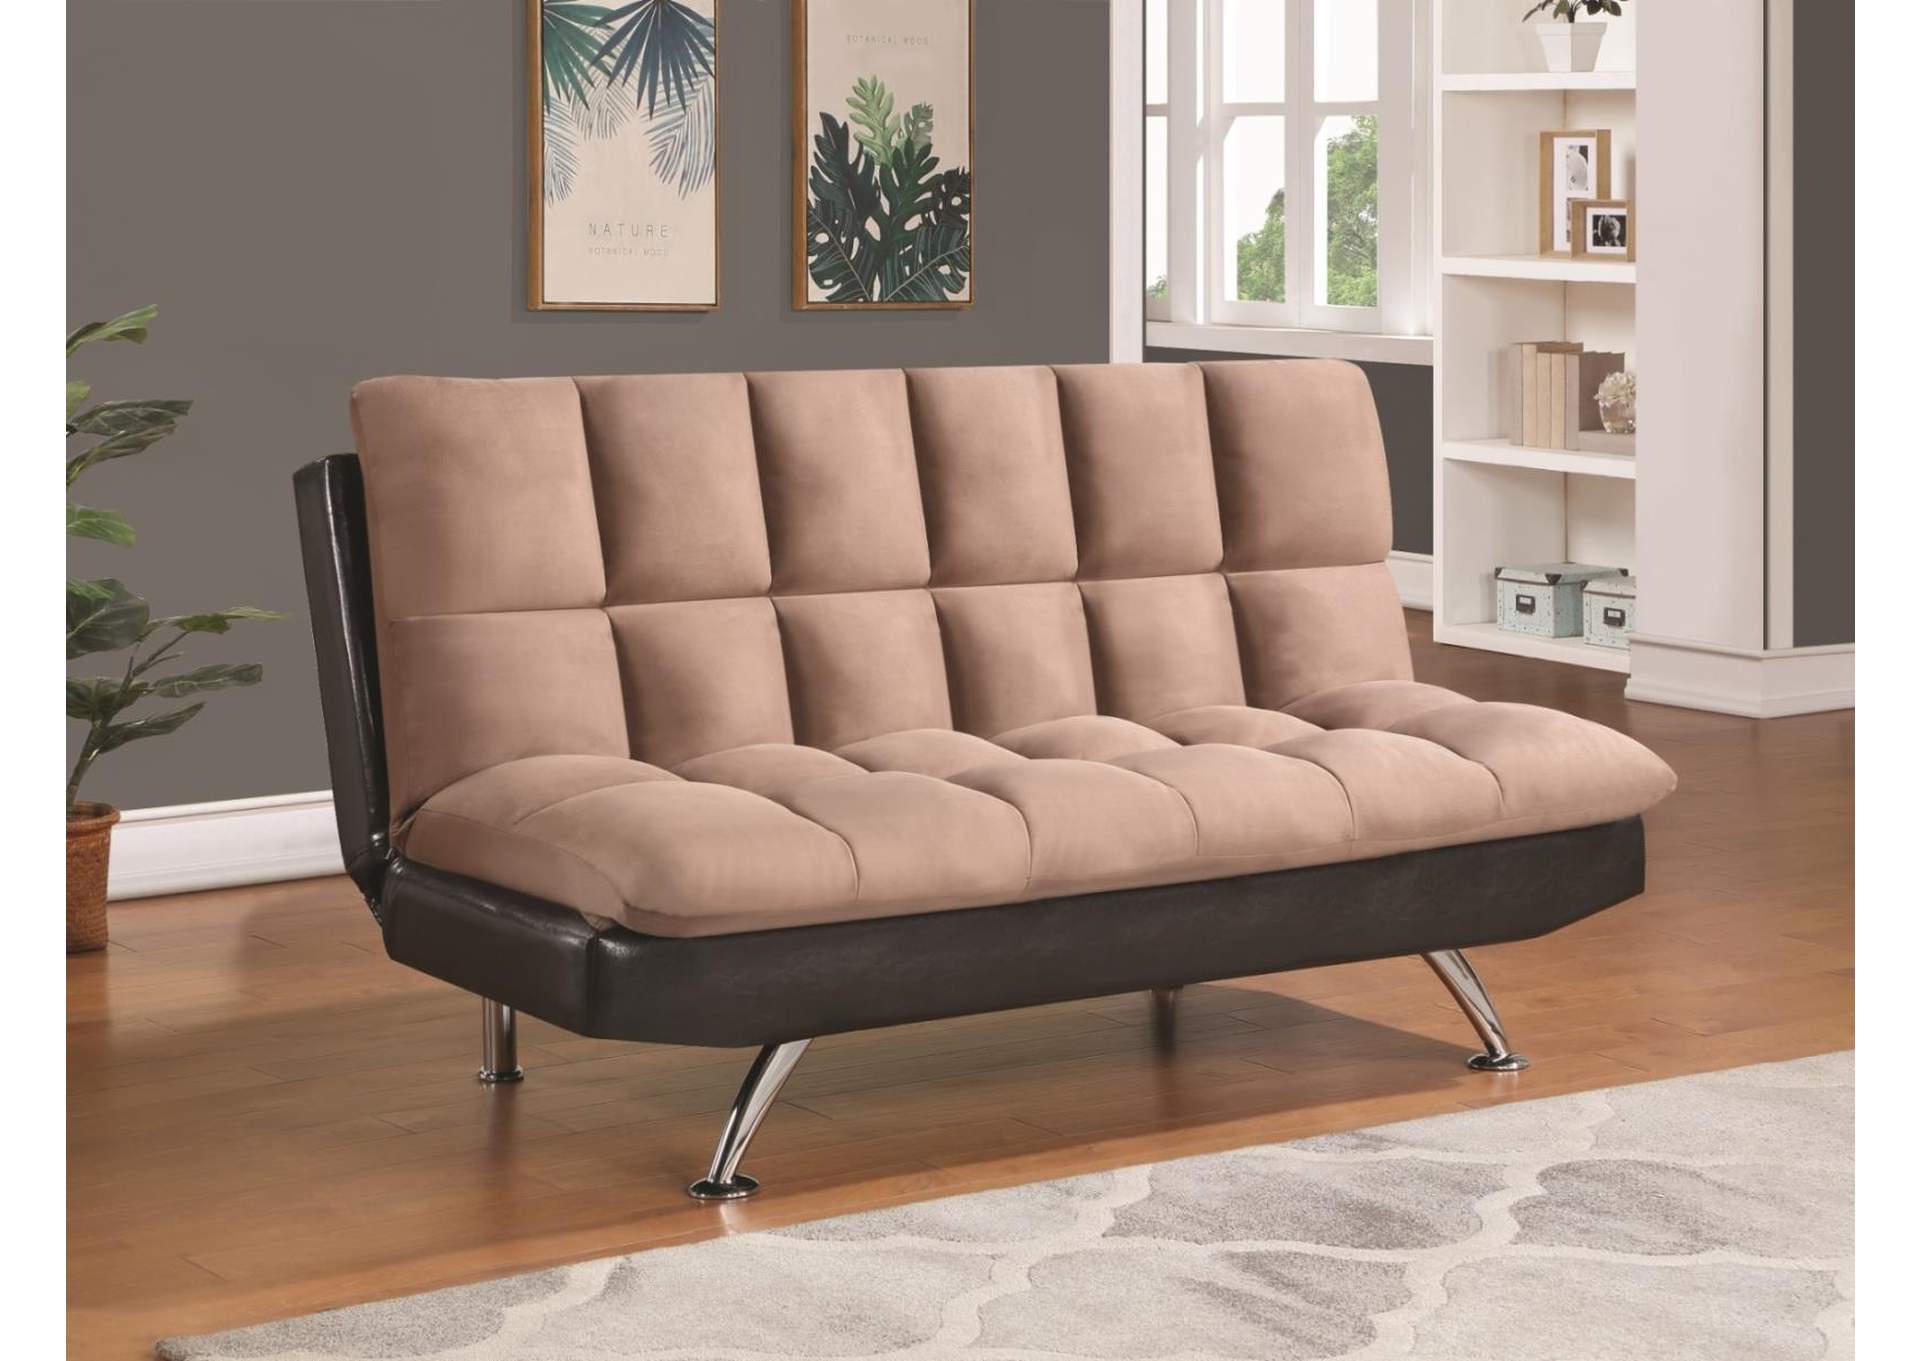 Sandstone Casual Overstuffed Brown Sofa Bed,Coaster Furniture